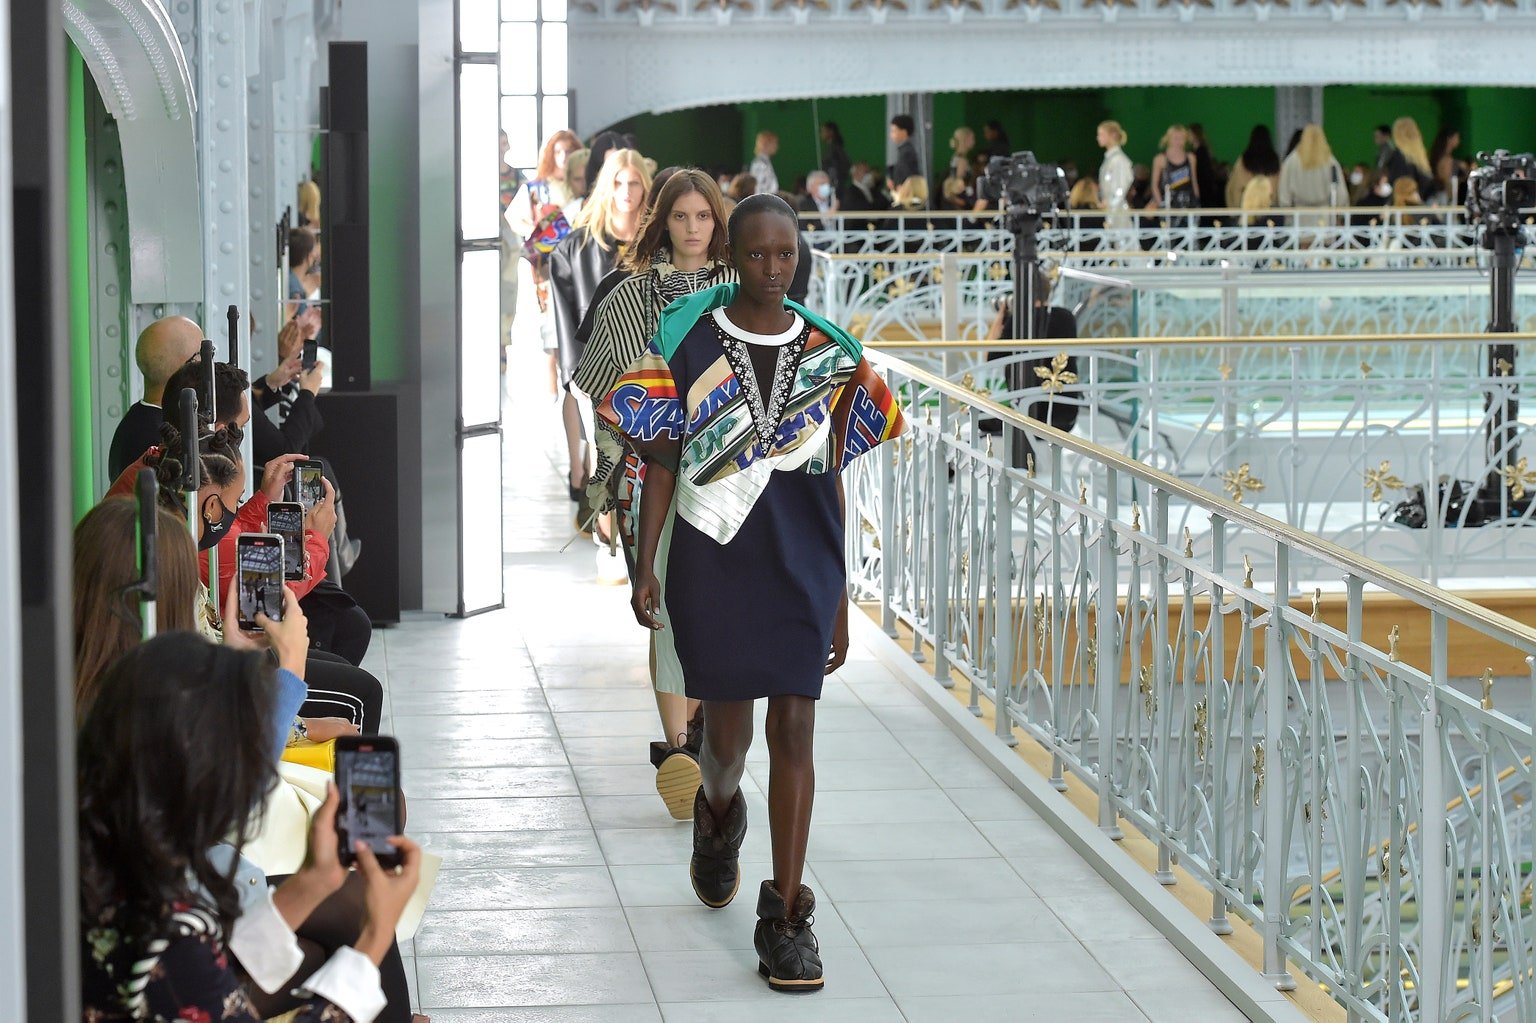 Nicolas Ghesquiere Embraces Inclusivity for Louis Vuitton Spring